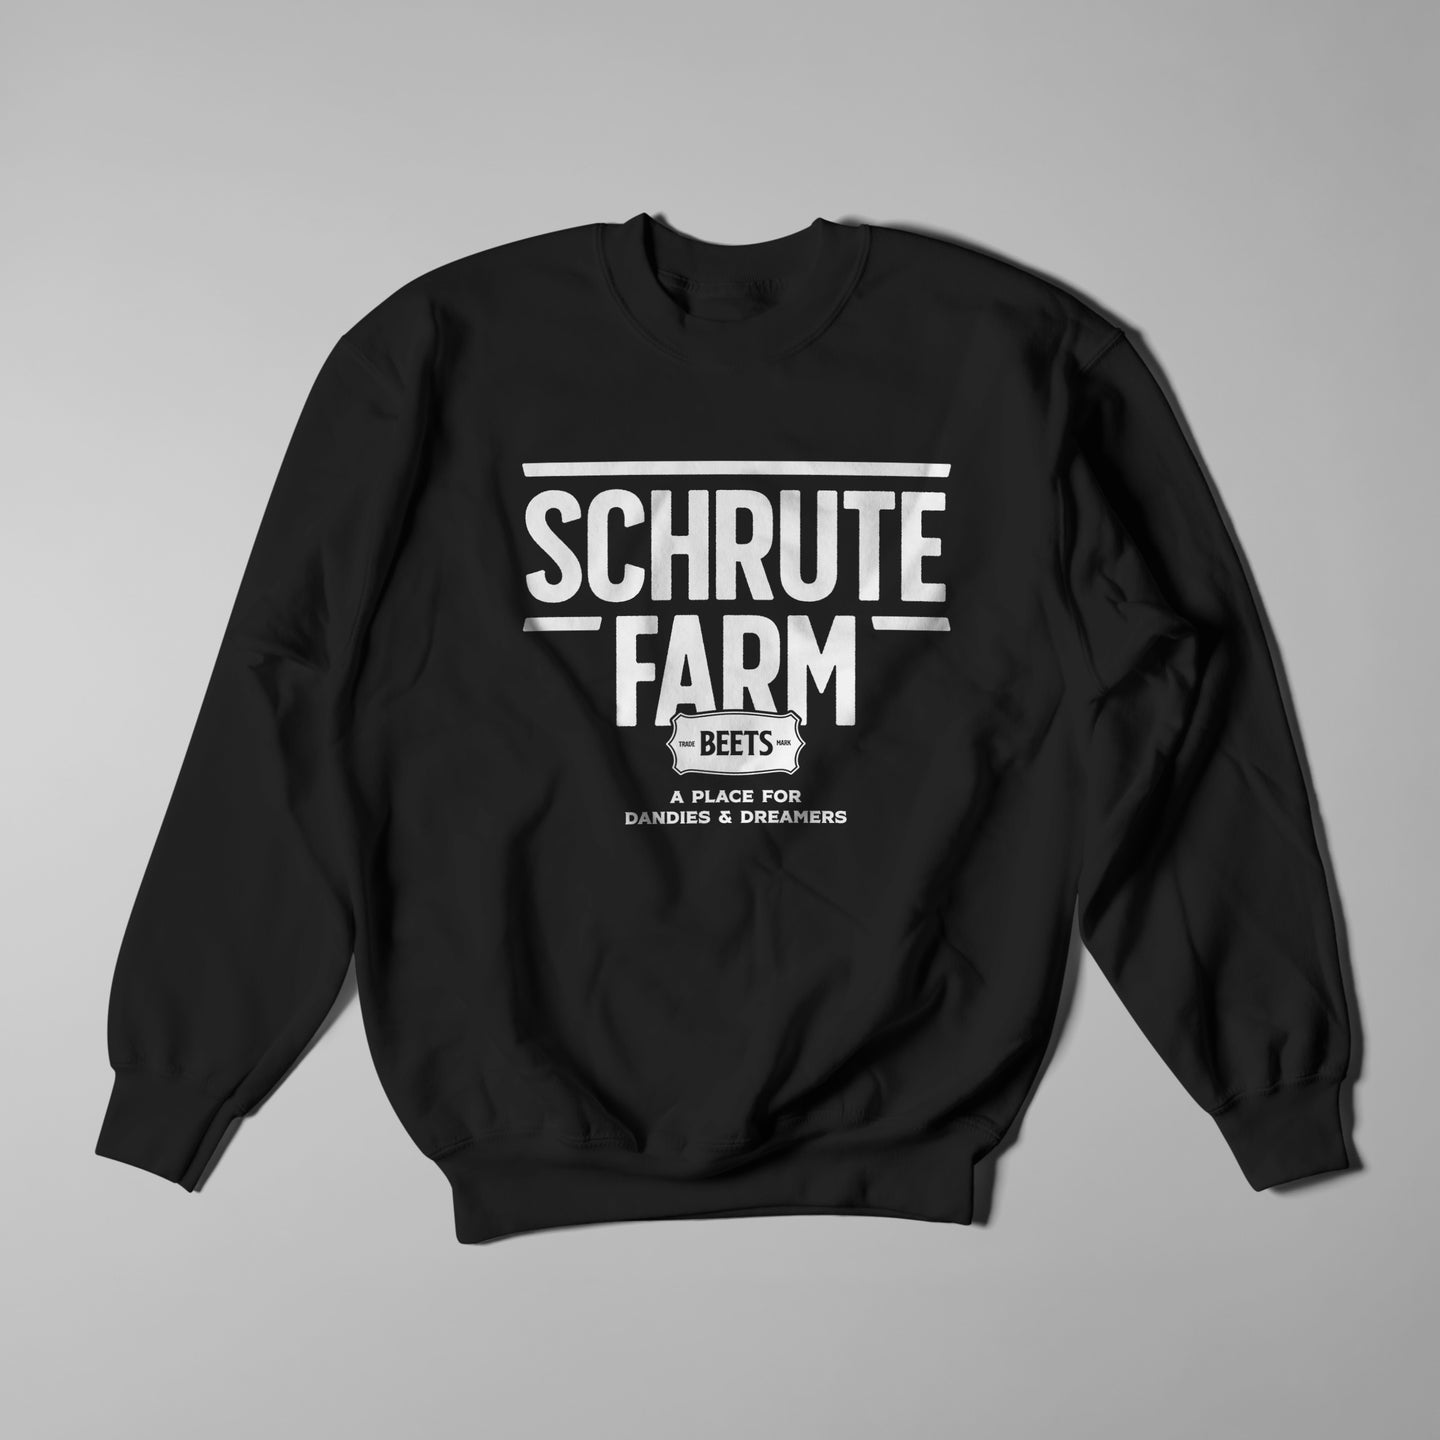 Schrute Farm Sweatshirt - Black